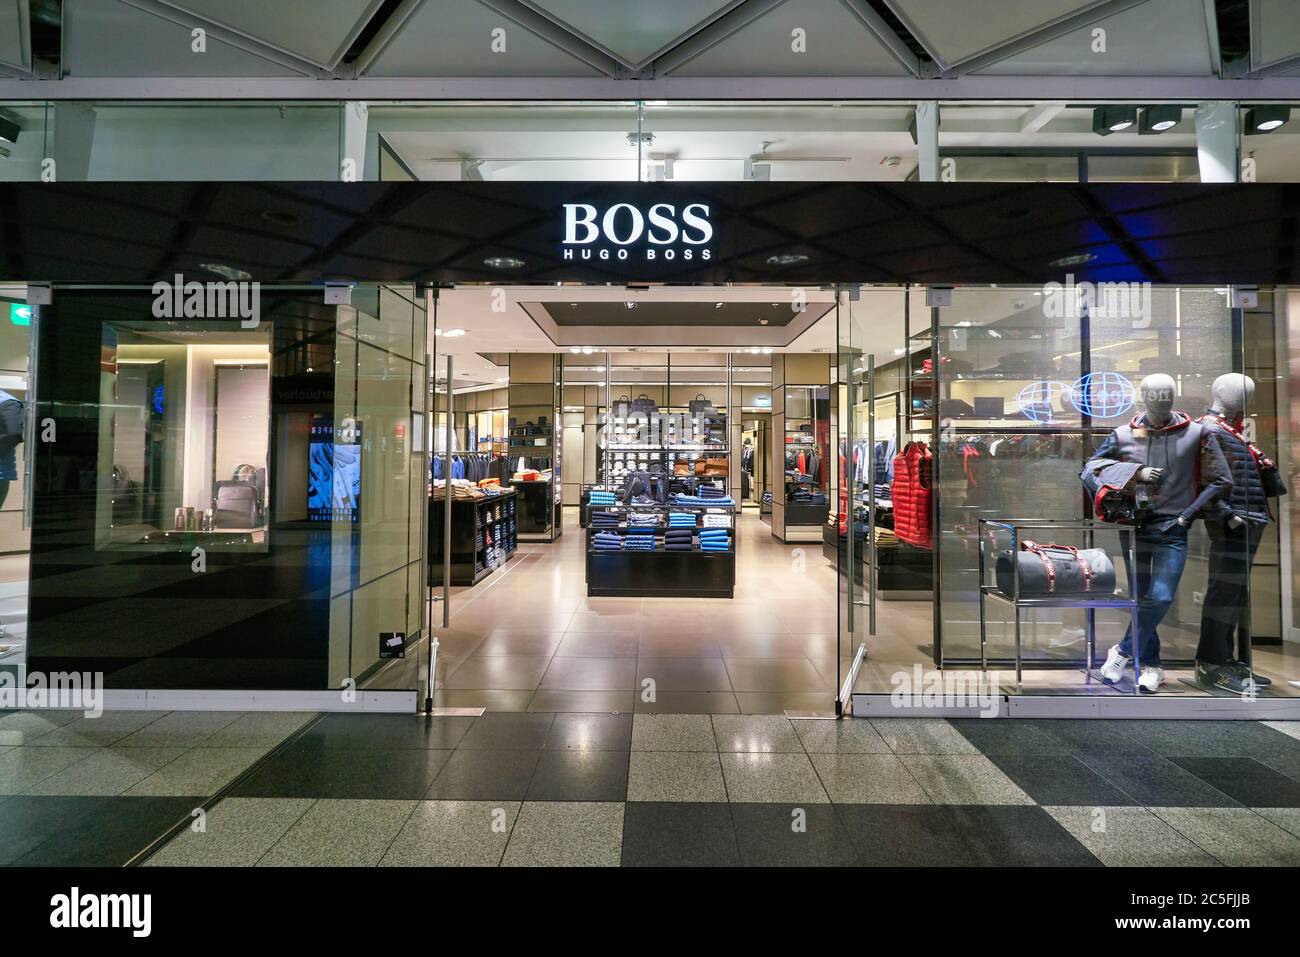 hugo boss discount store